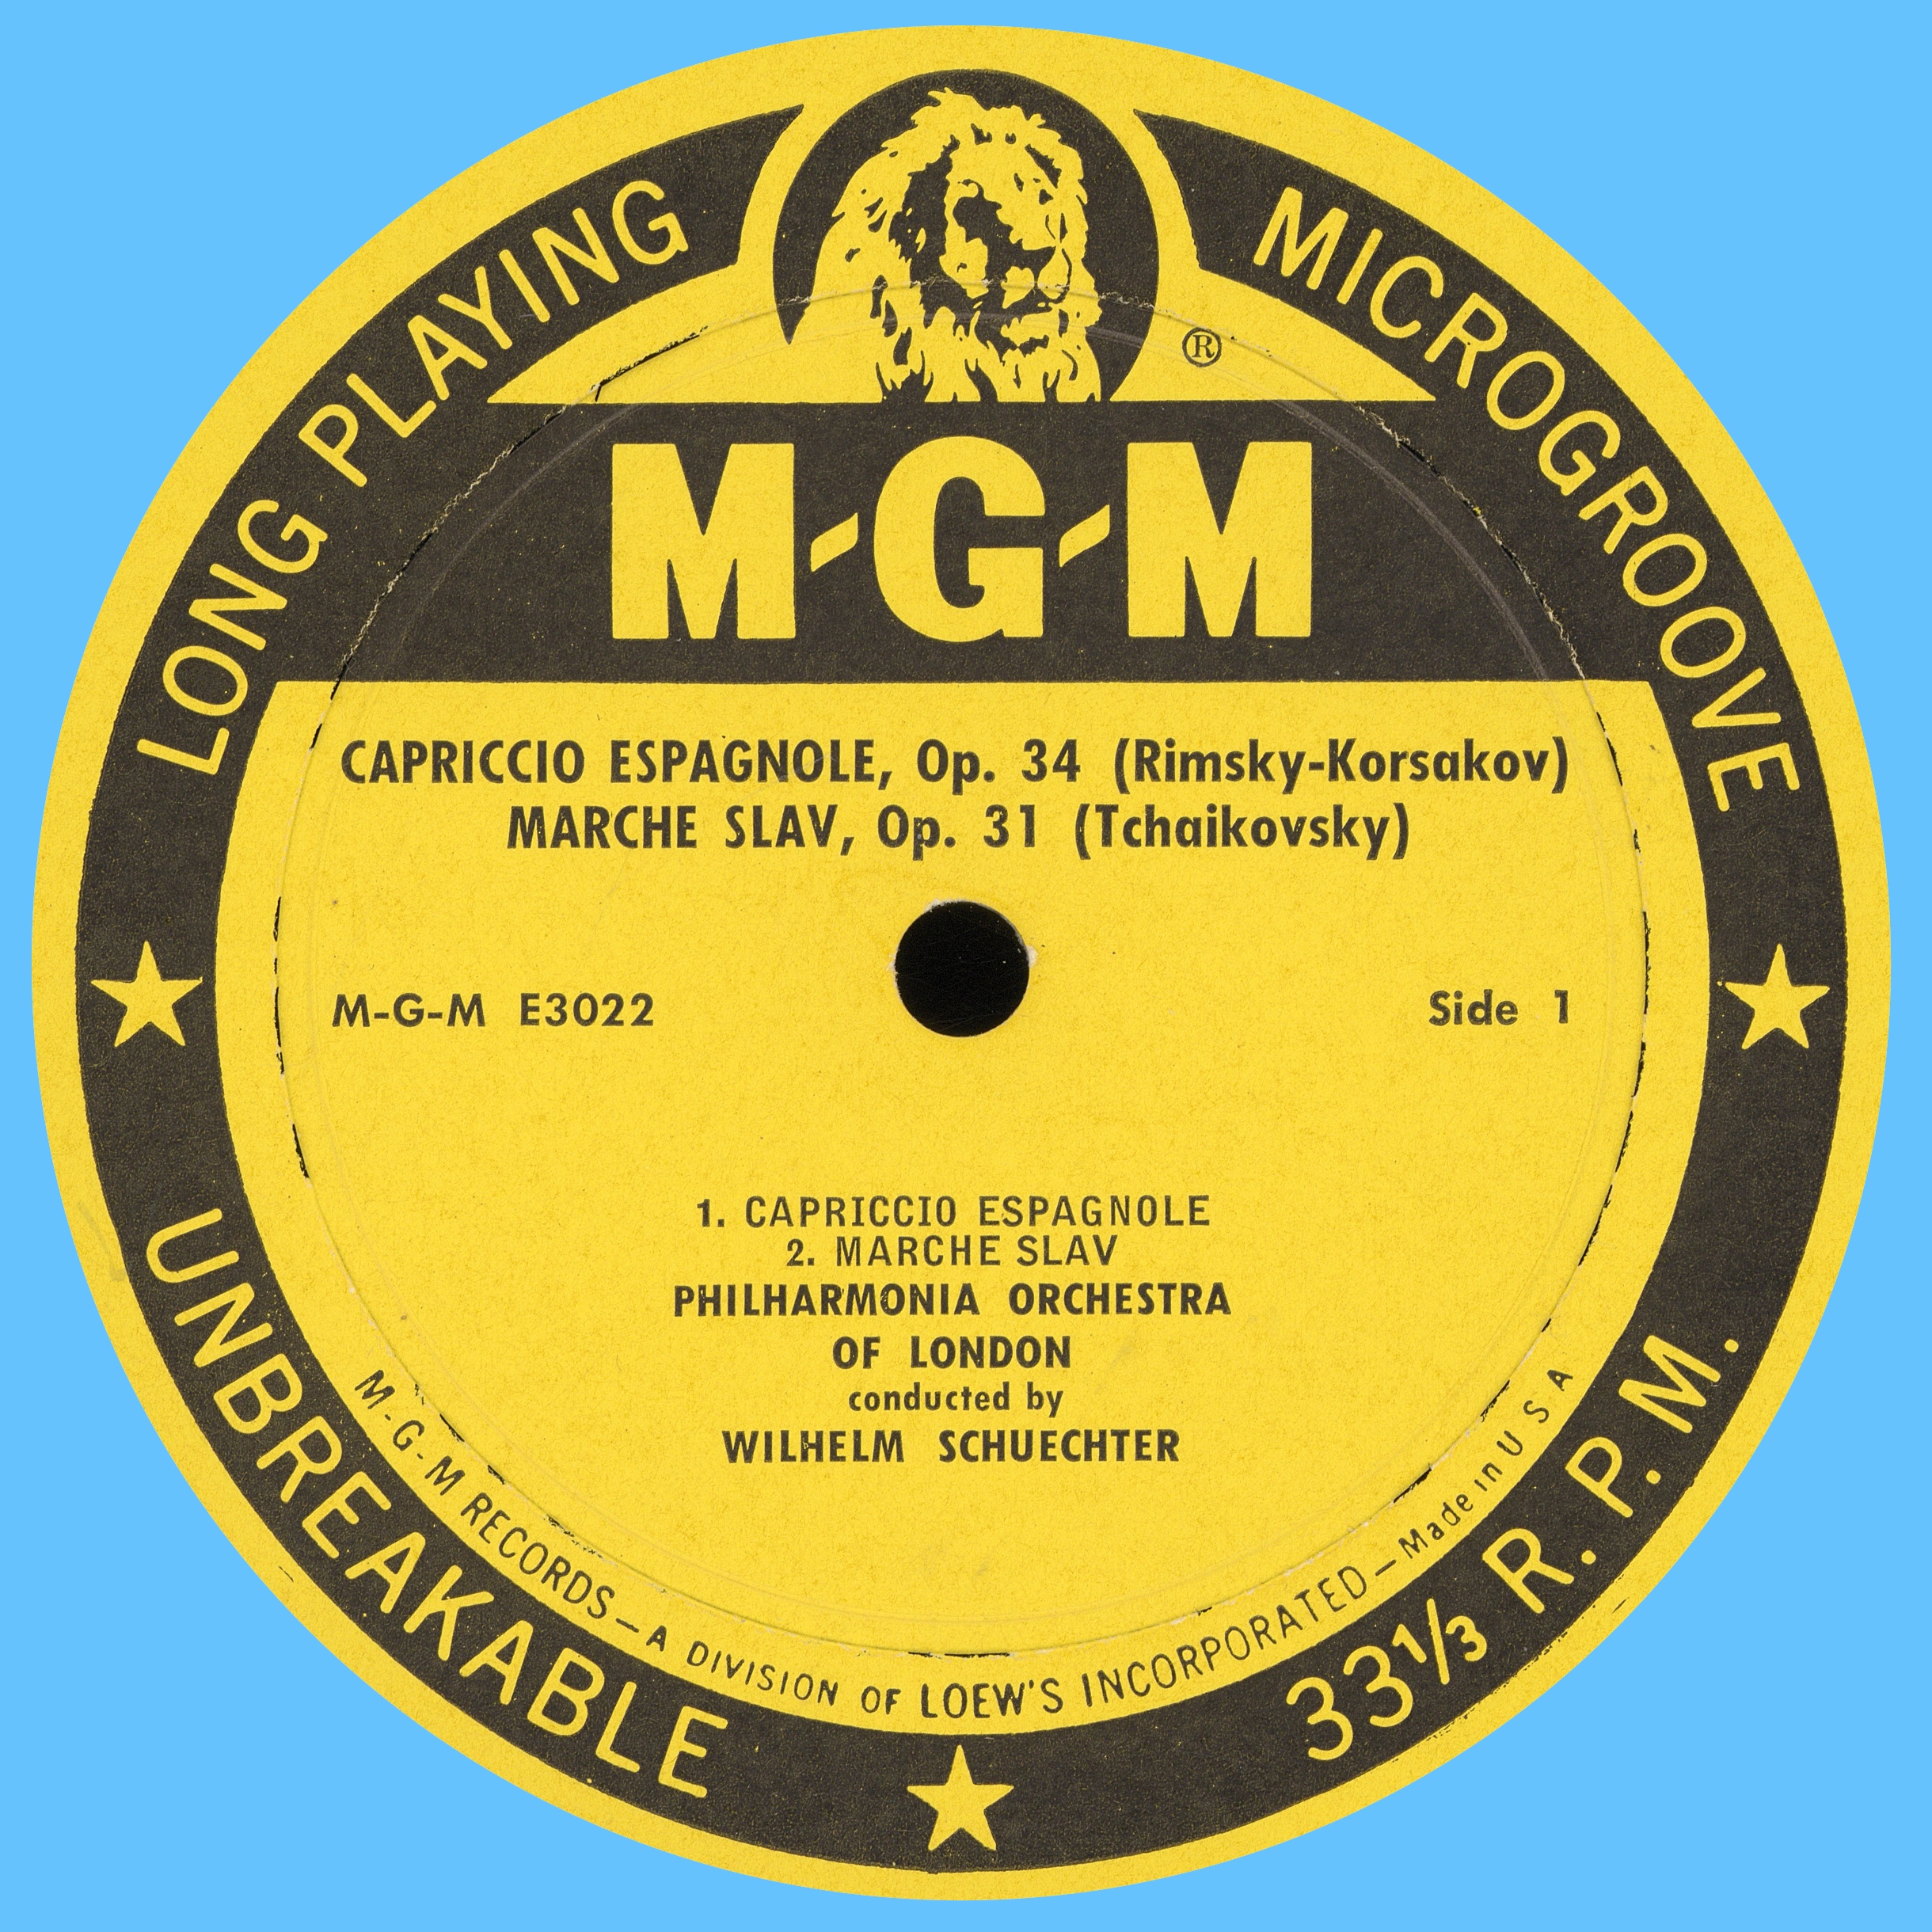 Étiquette recto du disque Metro Goldwyn Mayer MGM E 3022